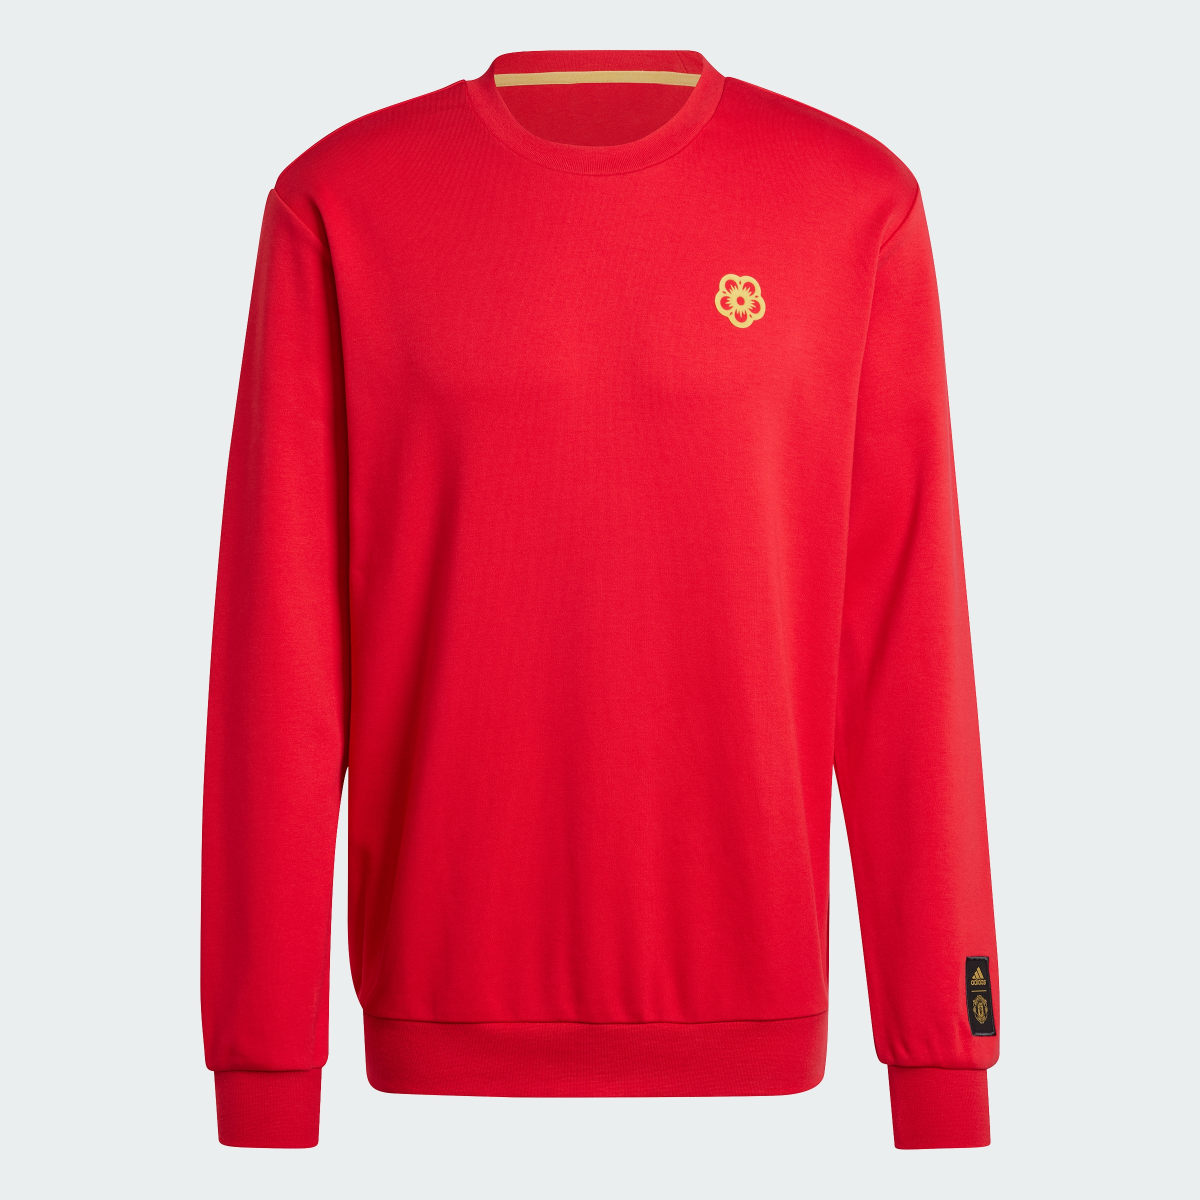 Adidas Sweatshirt Cultural Story do Manchester United. 5